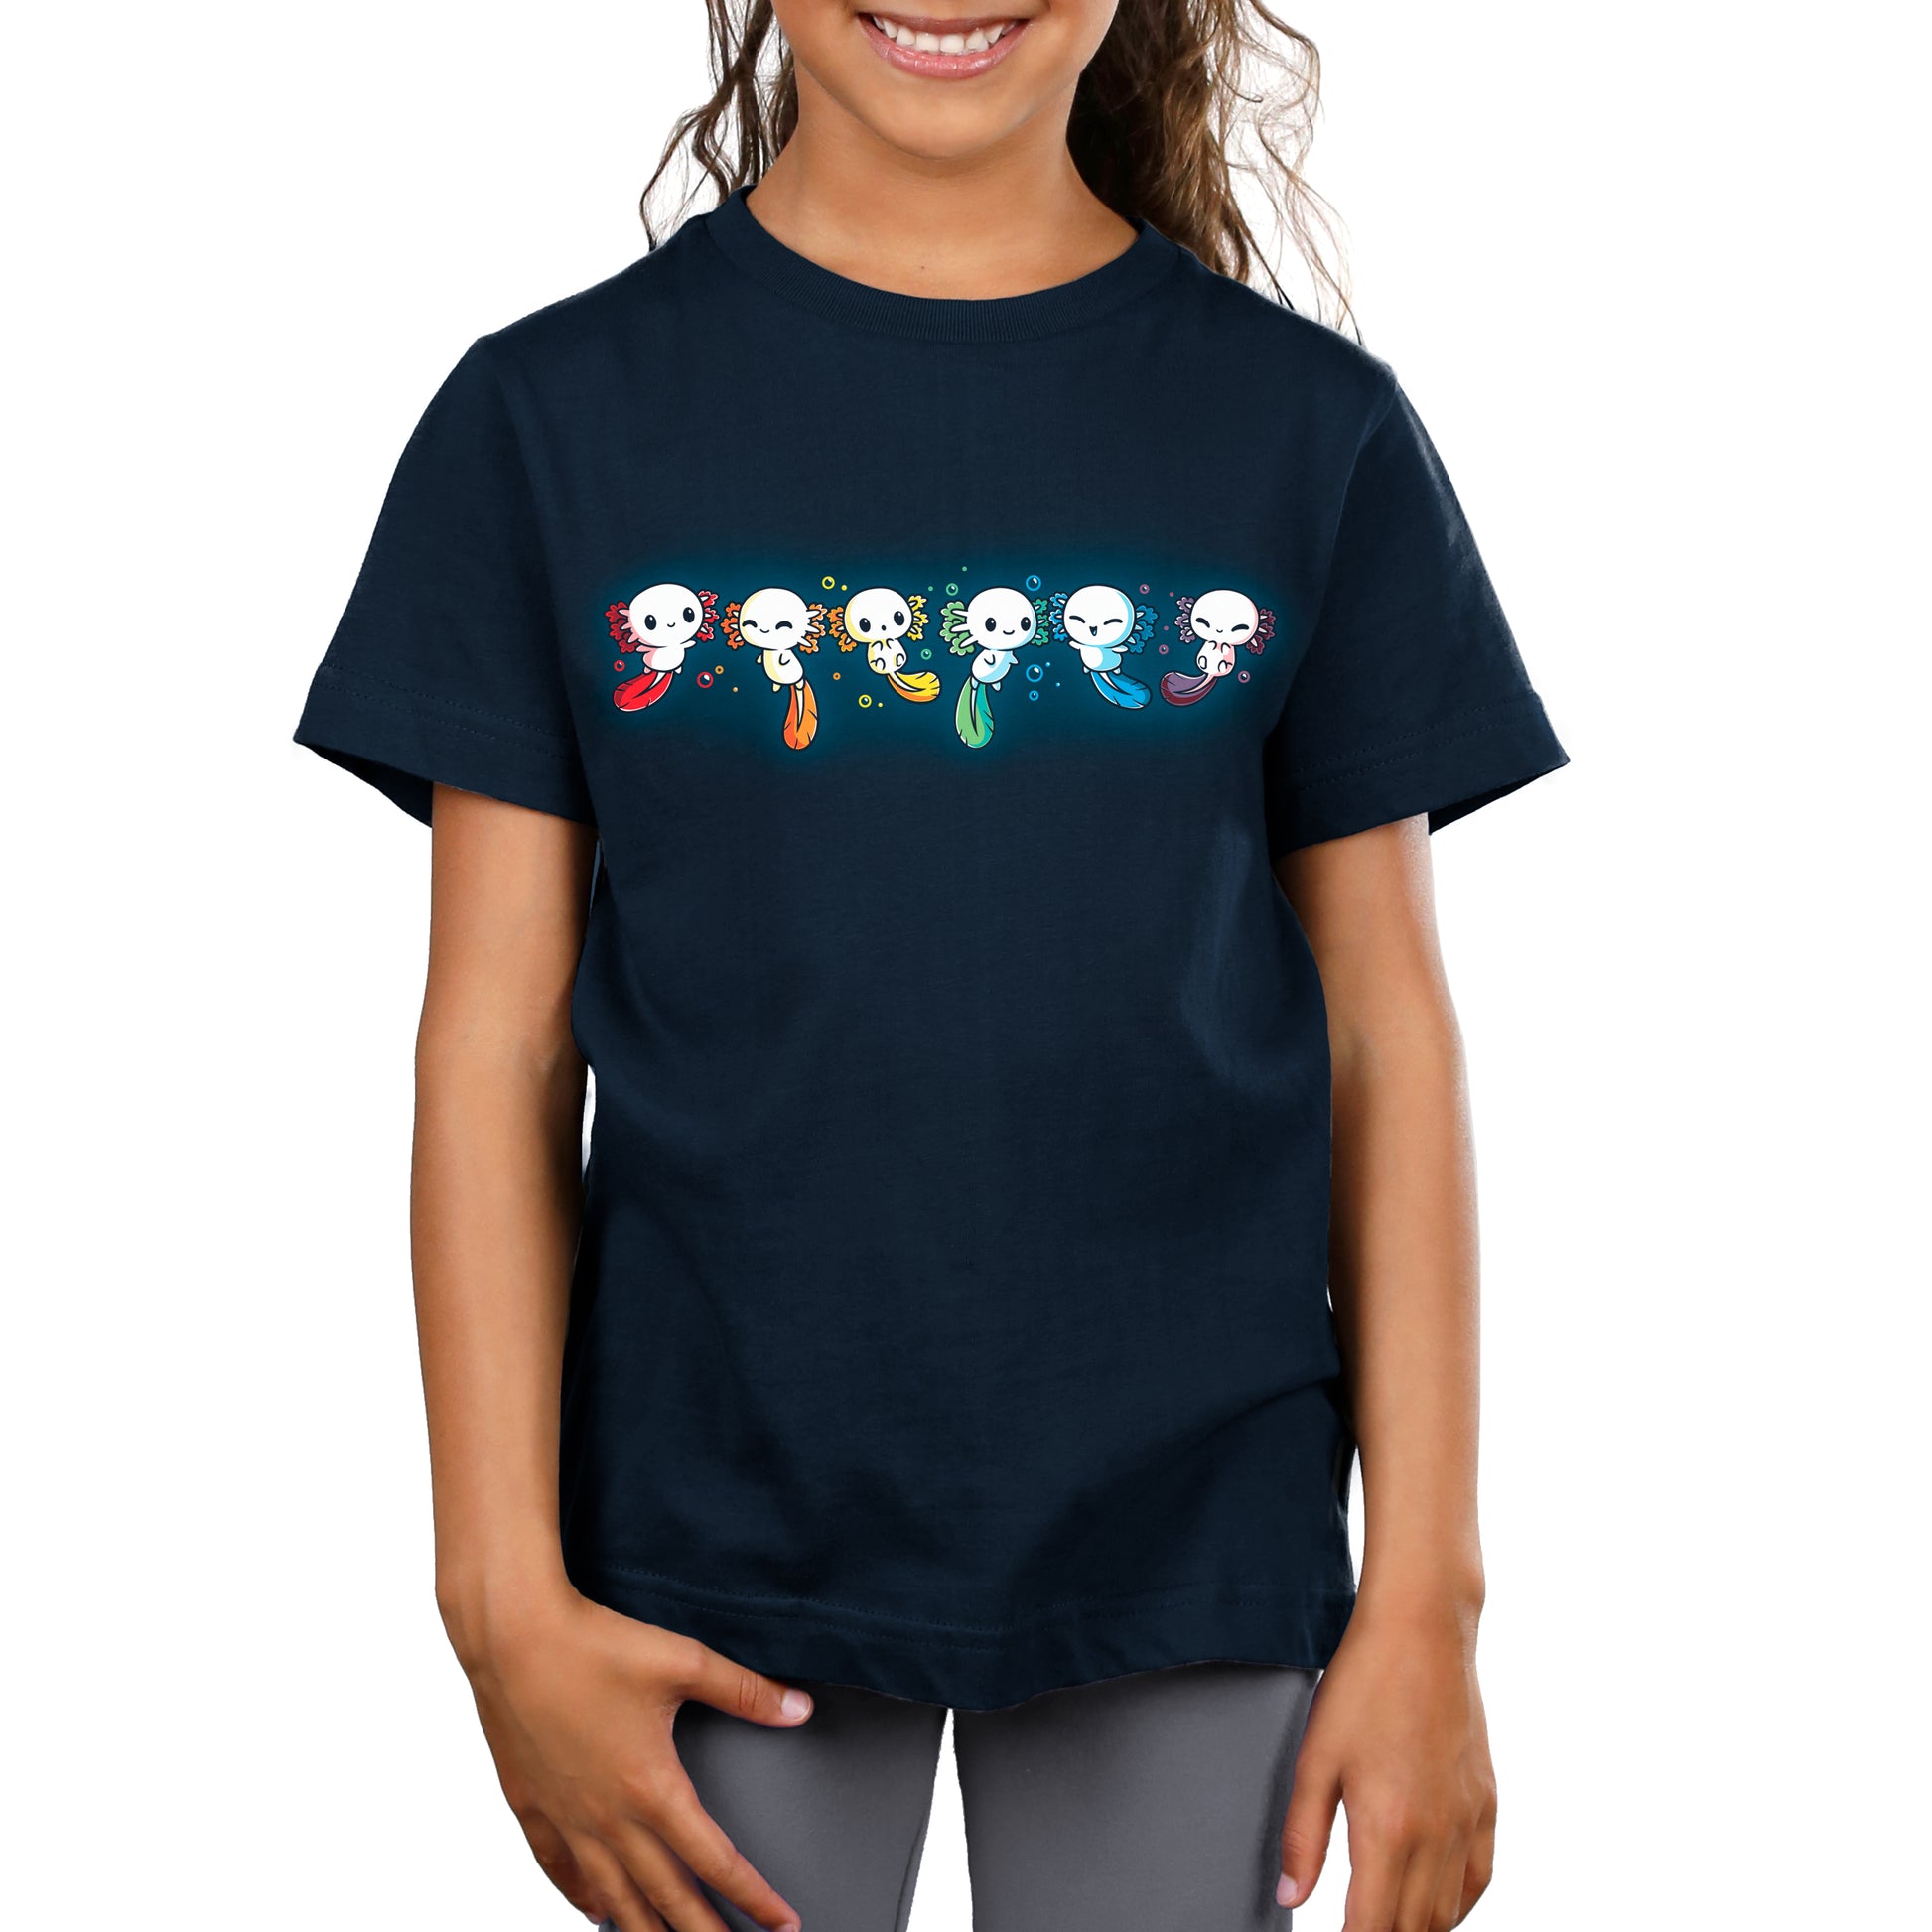 A girl wearing an Axolotl Rainbow t-shirt by TeeTurtle.